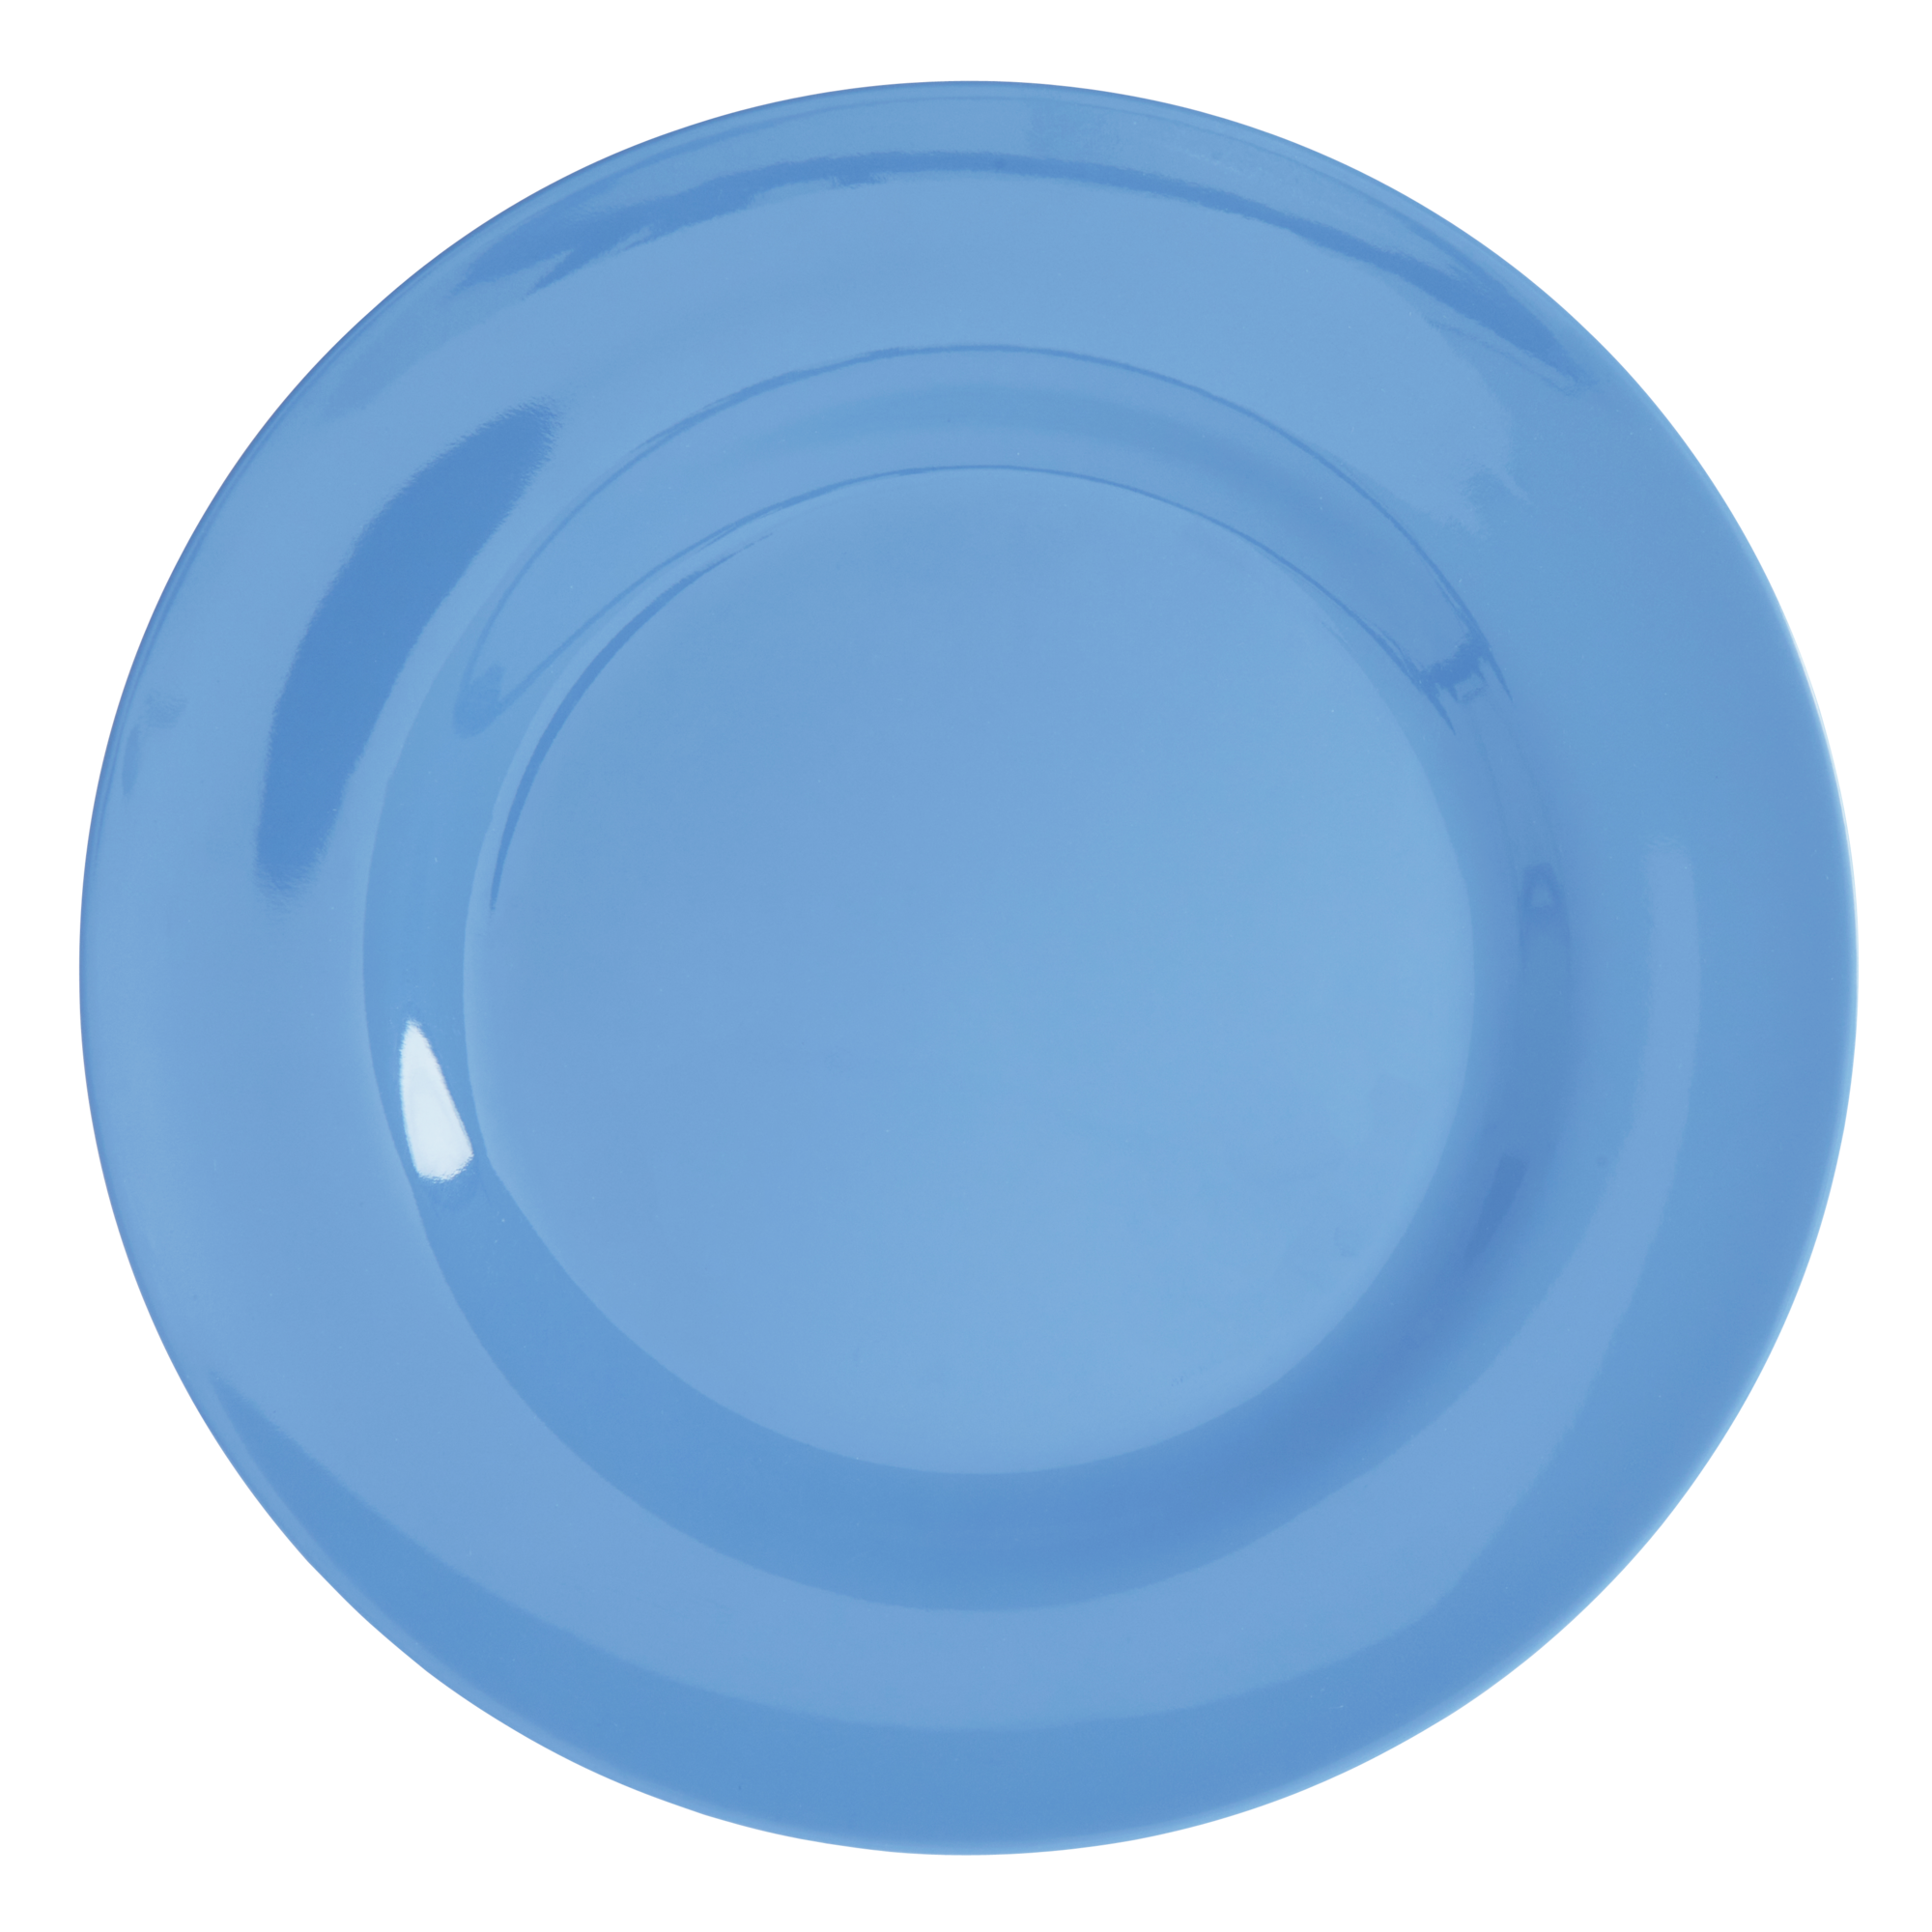 RICE: Rond diner bord - Blauw MELRP-6ZAW22GB